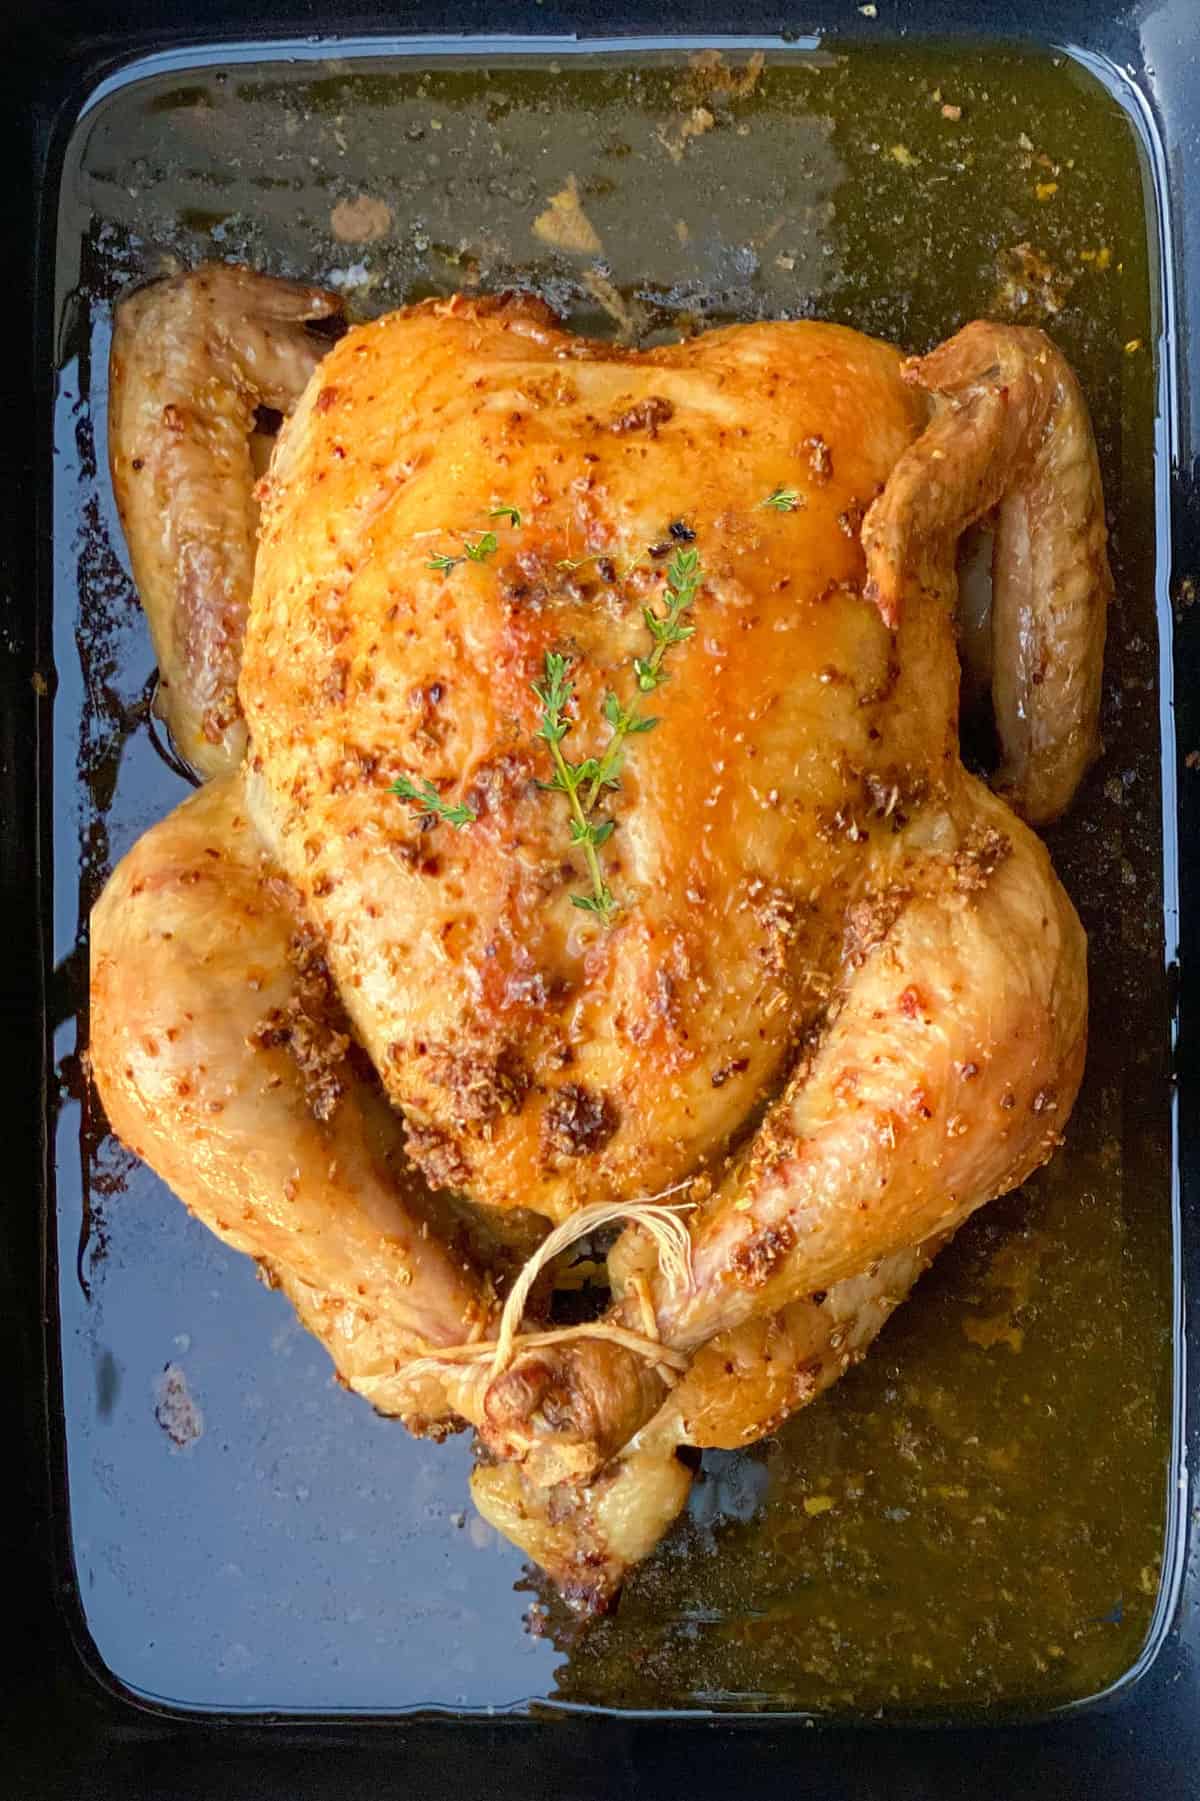 https://www.panningtheglobe.com/wp-content/uploads/2021/09/slow-roasted-chicken-recipe.jpg